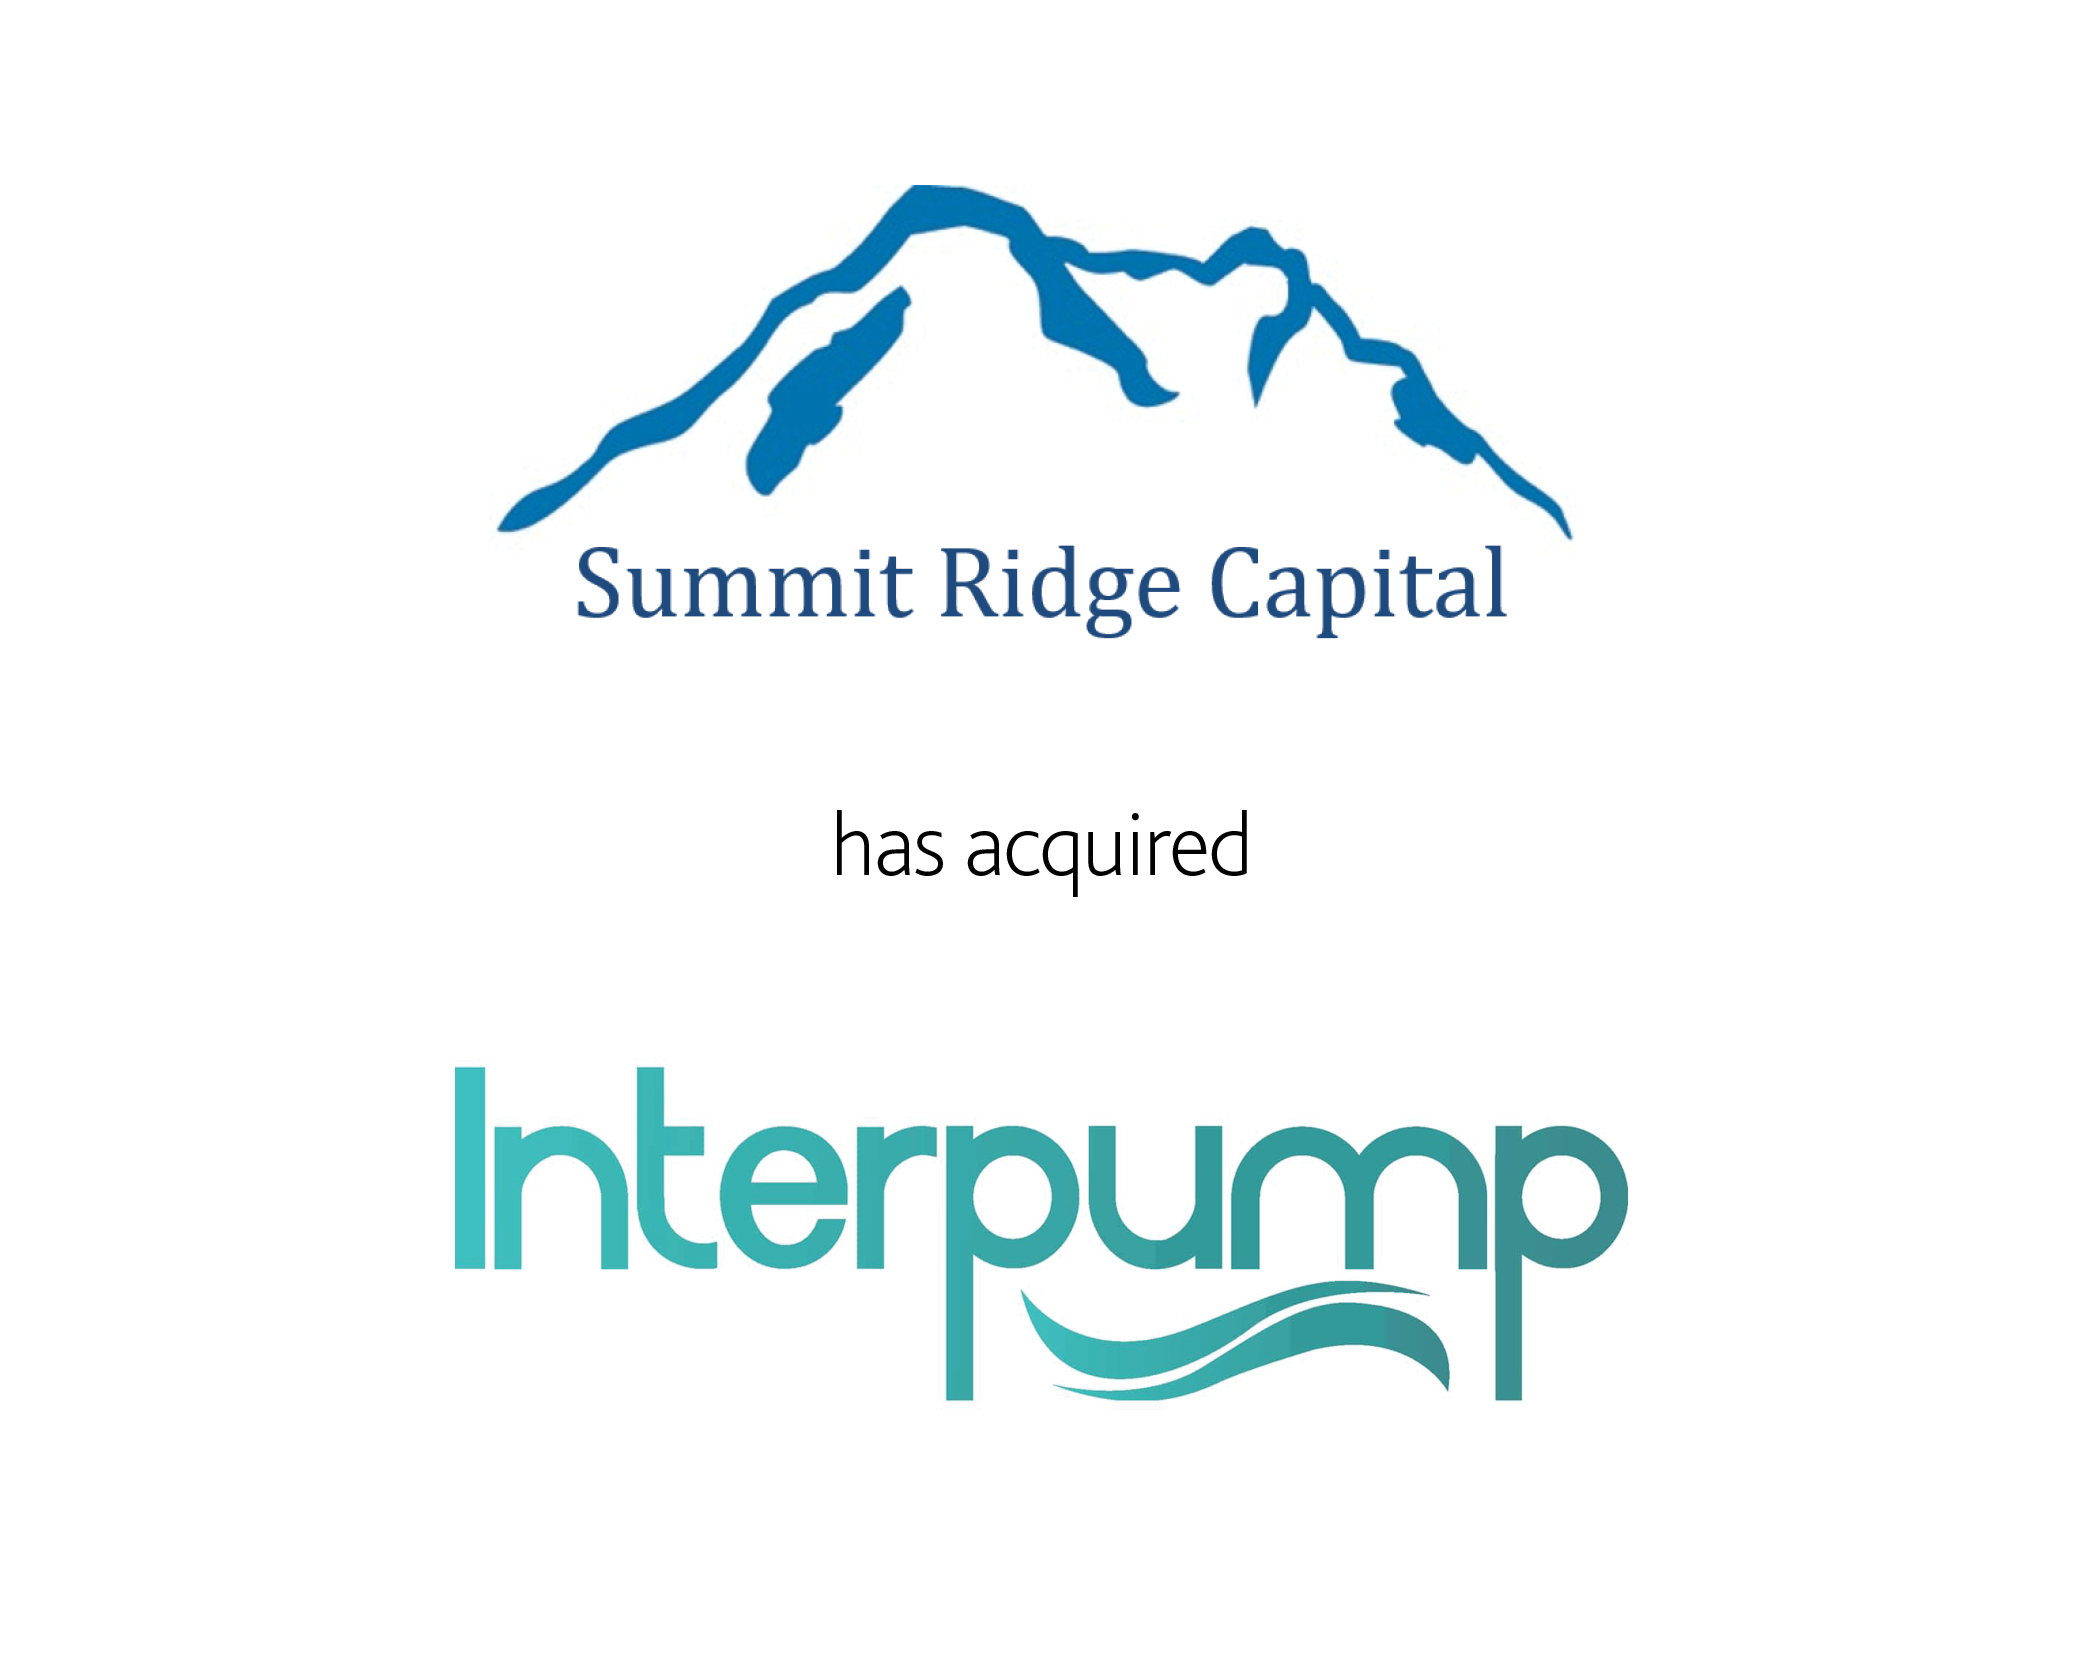 Summit Ridge Capital has acquired Interpump